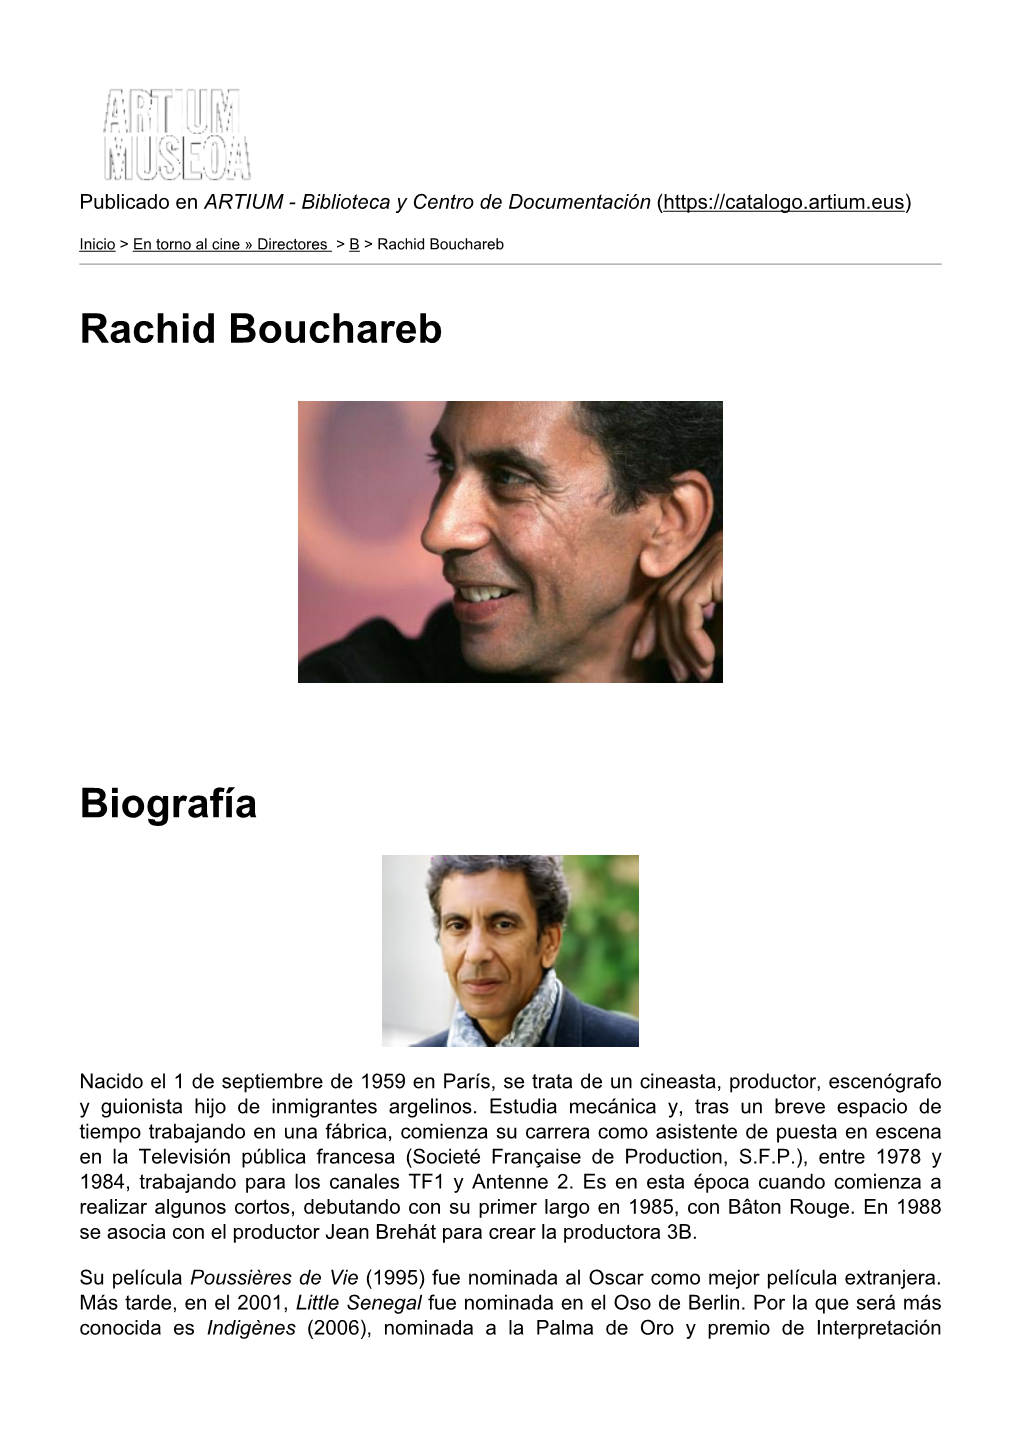 Rachid Bouchareb Biografía